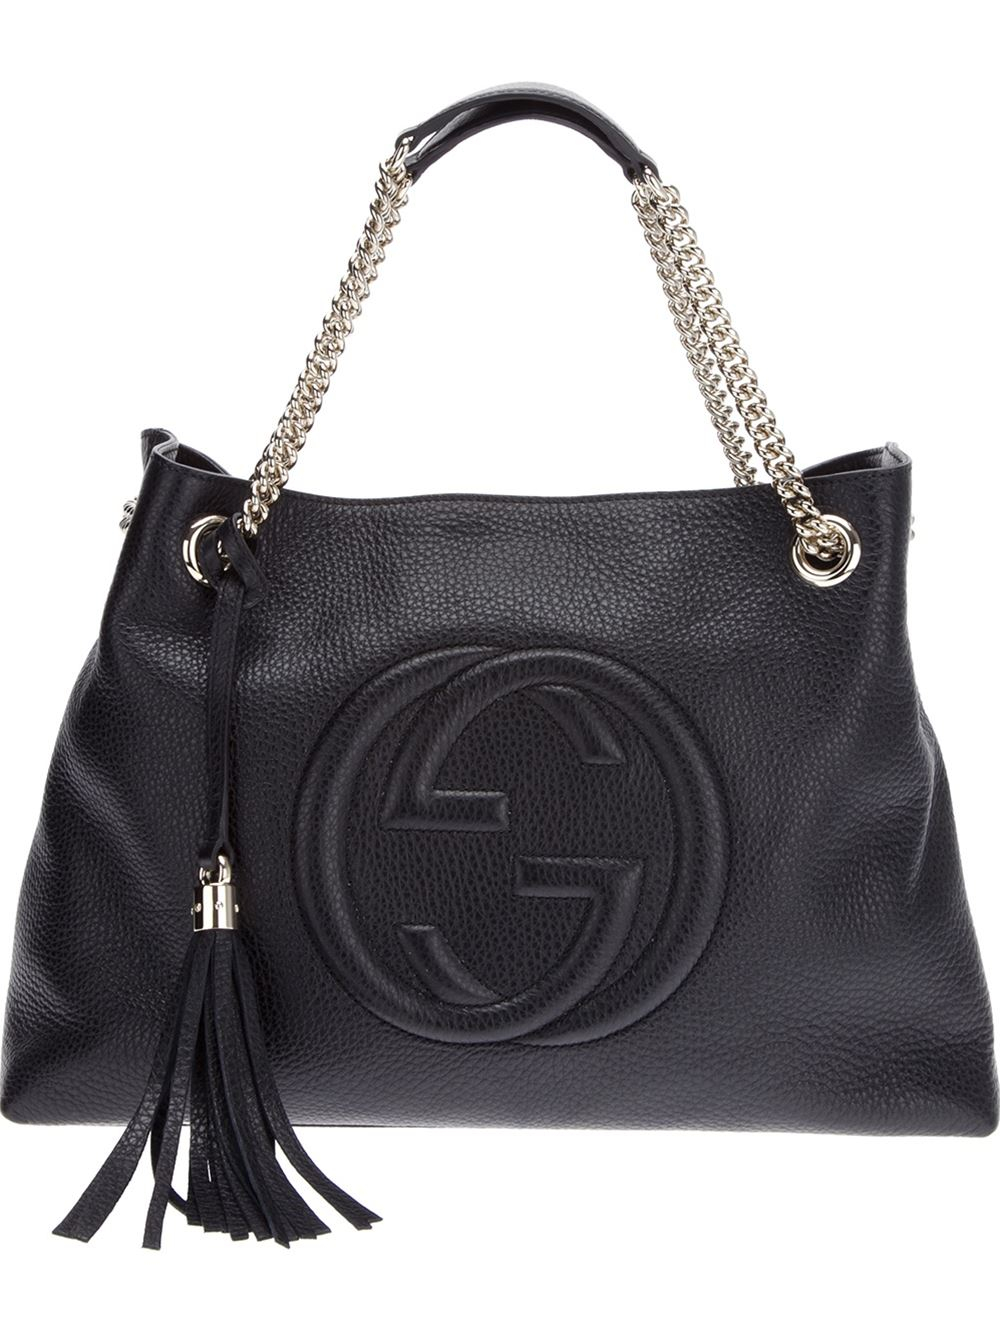 Lyst - Gucci Raised Logo Tote in Black